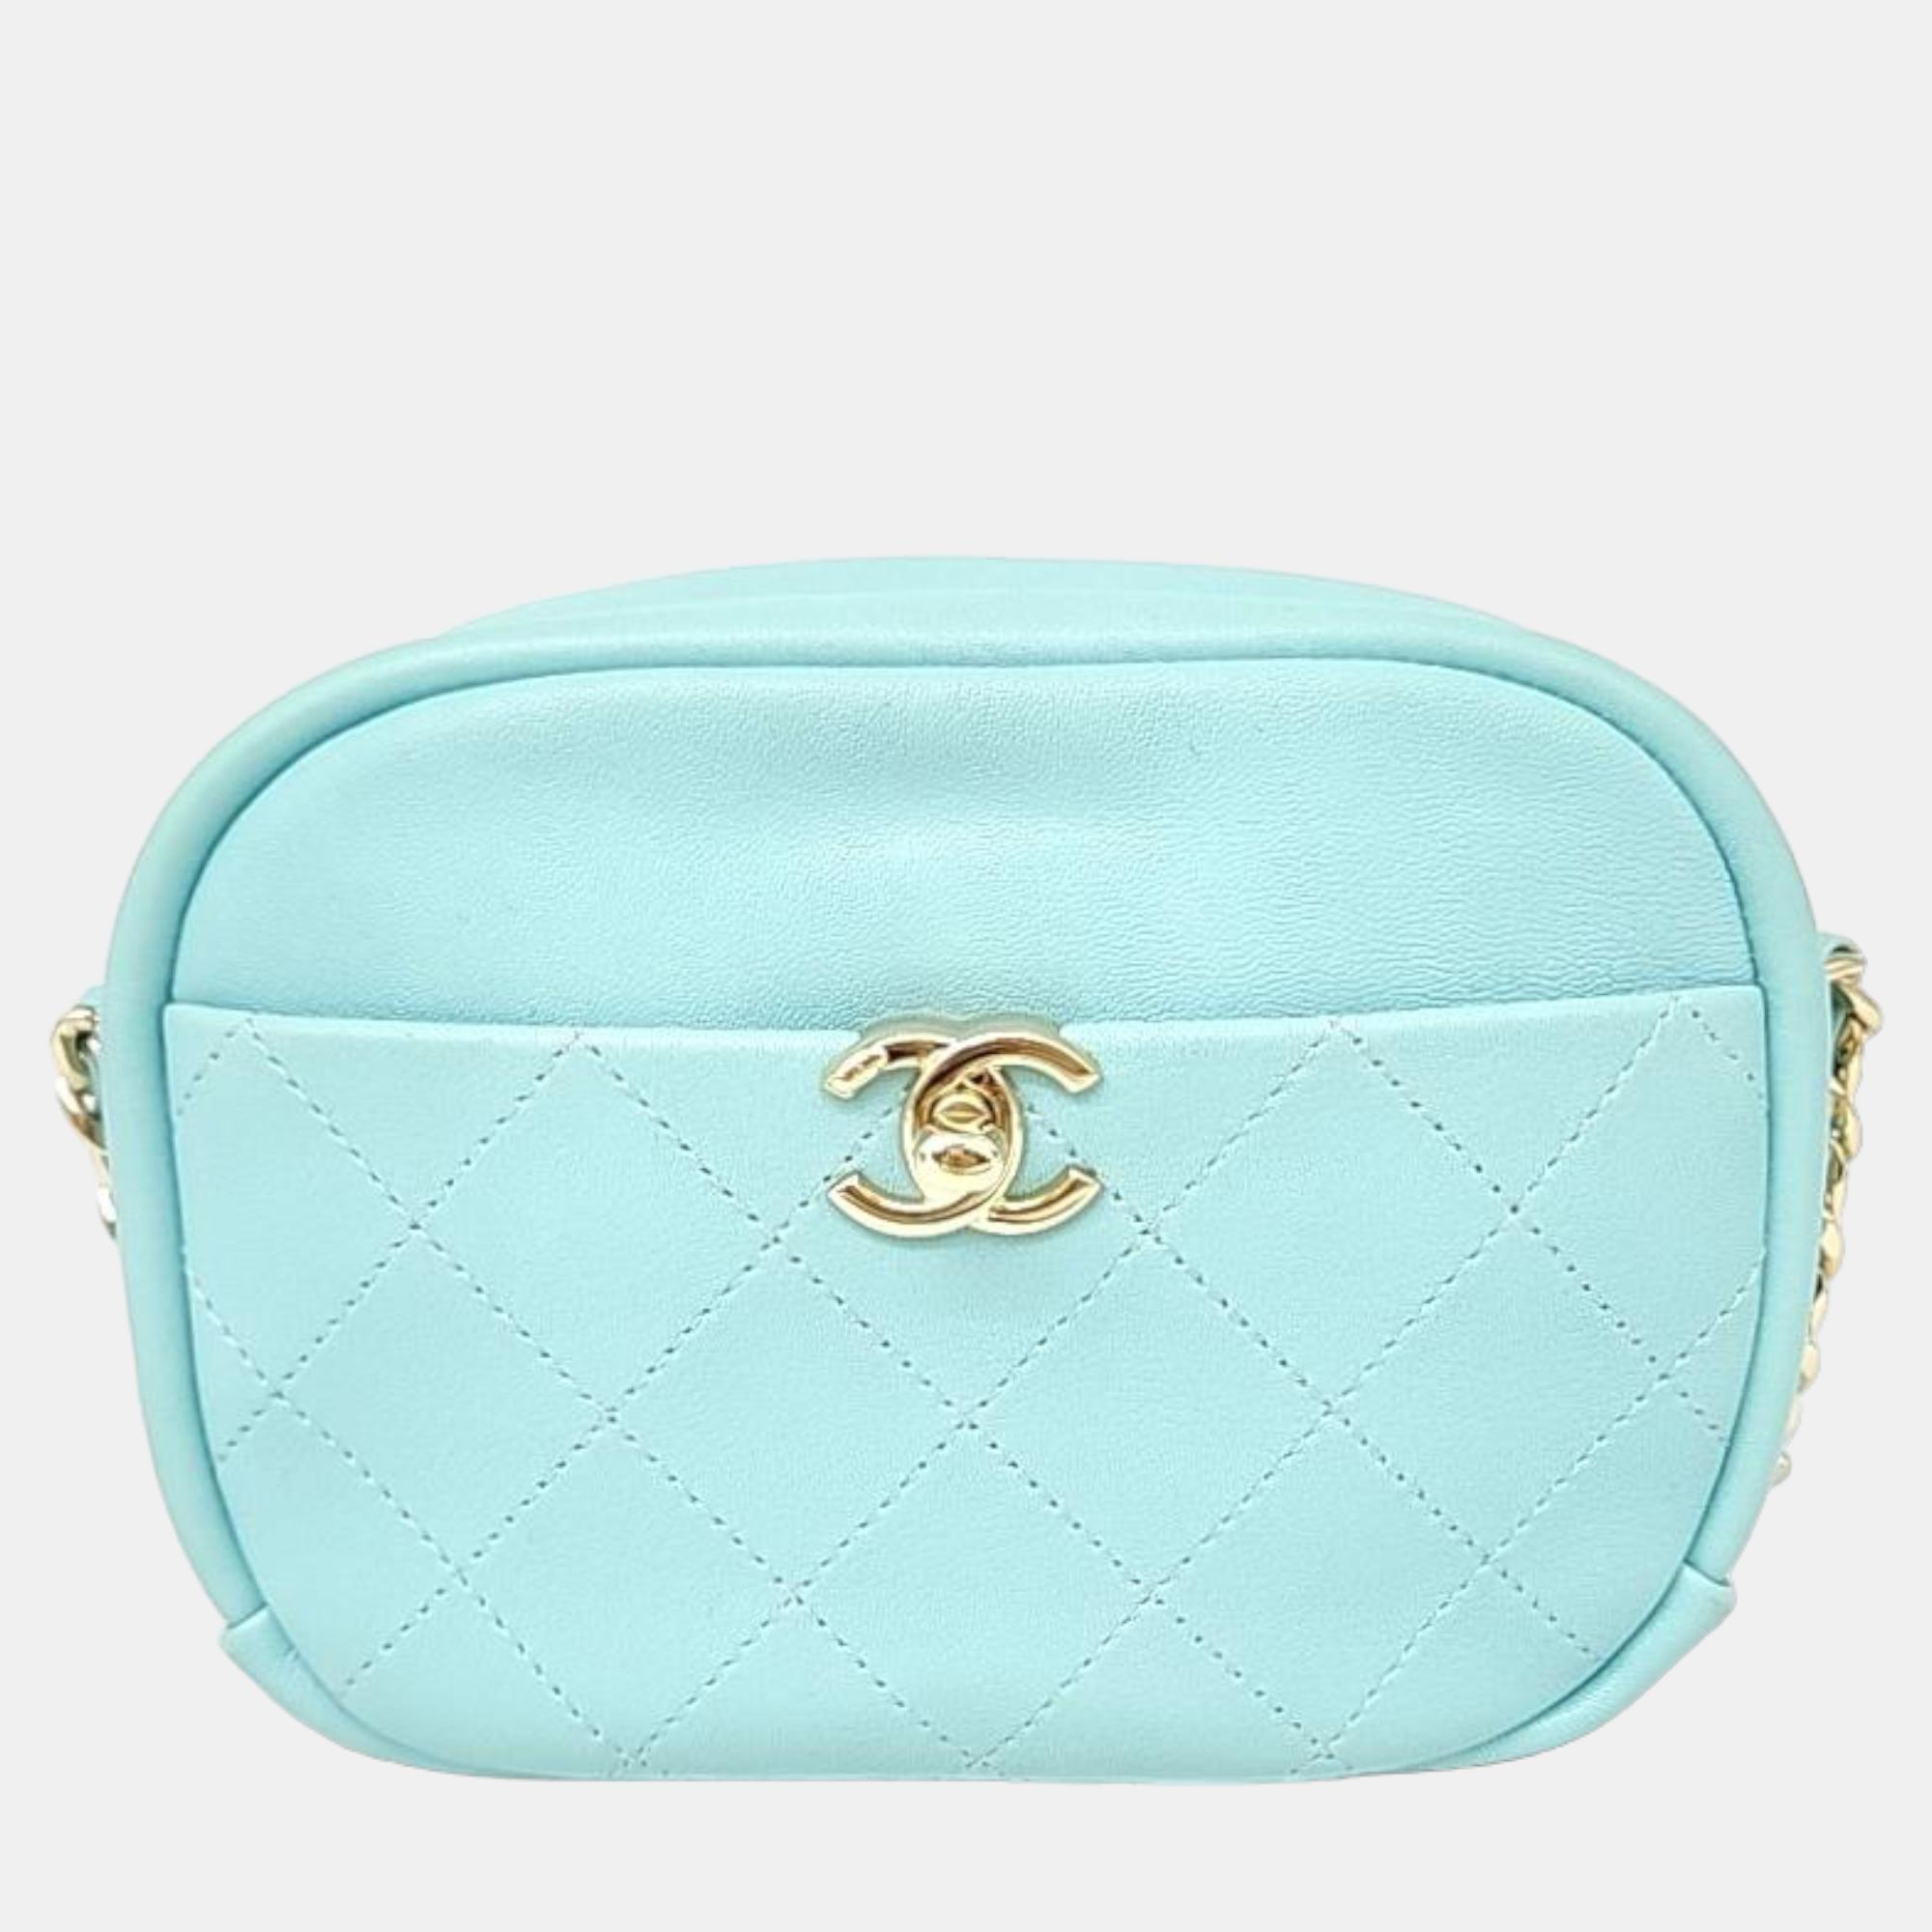 Chanel Blue Leather Small Camera Shoulder Bag